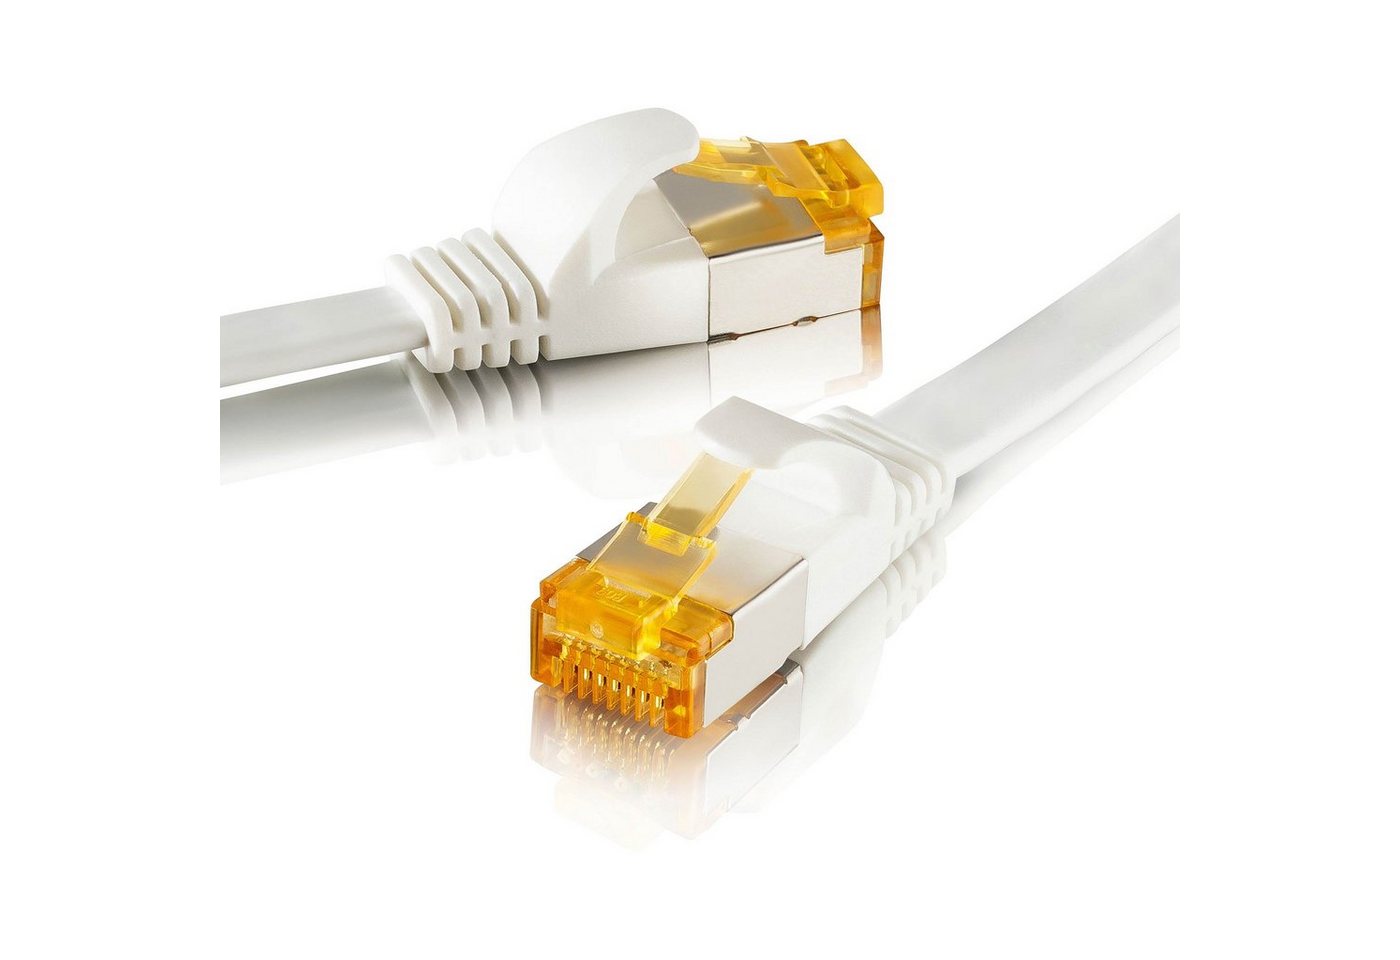 SEBSON LAN Kabel 30m CAT 7 flach, Netzwerkkabel 10 Gbit/s, RJ45 Stecker Netzkabel, (3000 cm) von SEBSON